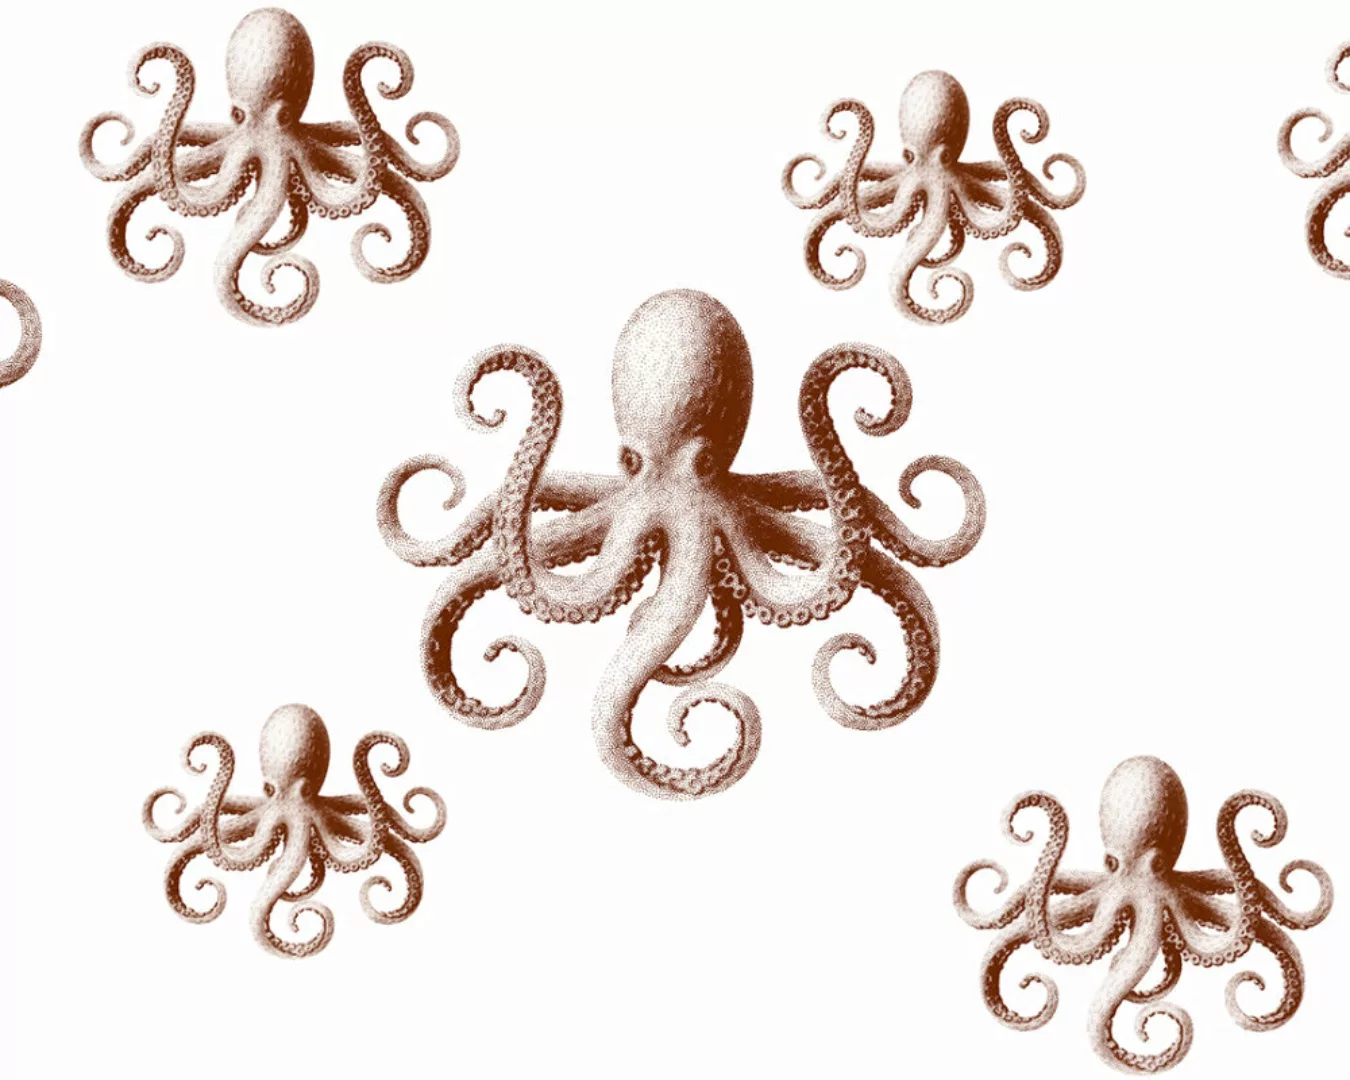 Fototapete "Octopusse rot" 6,00x2,50 m / Glattvlies Perlmutt günstig online kaufen